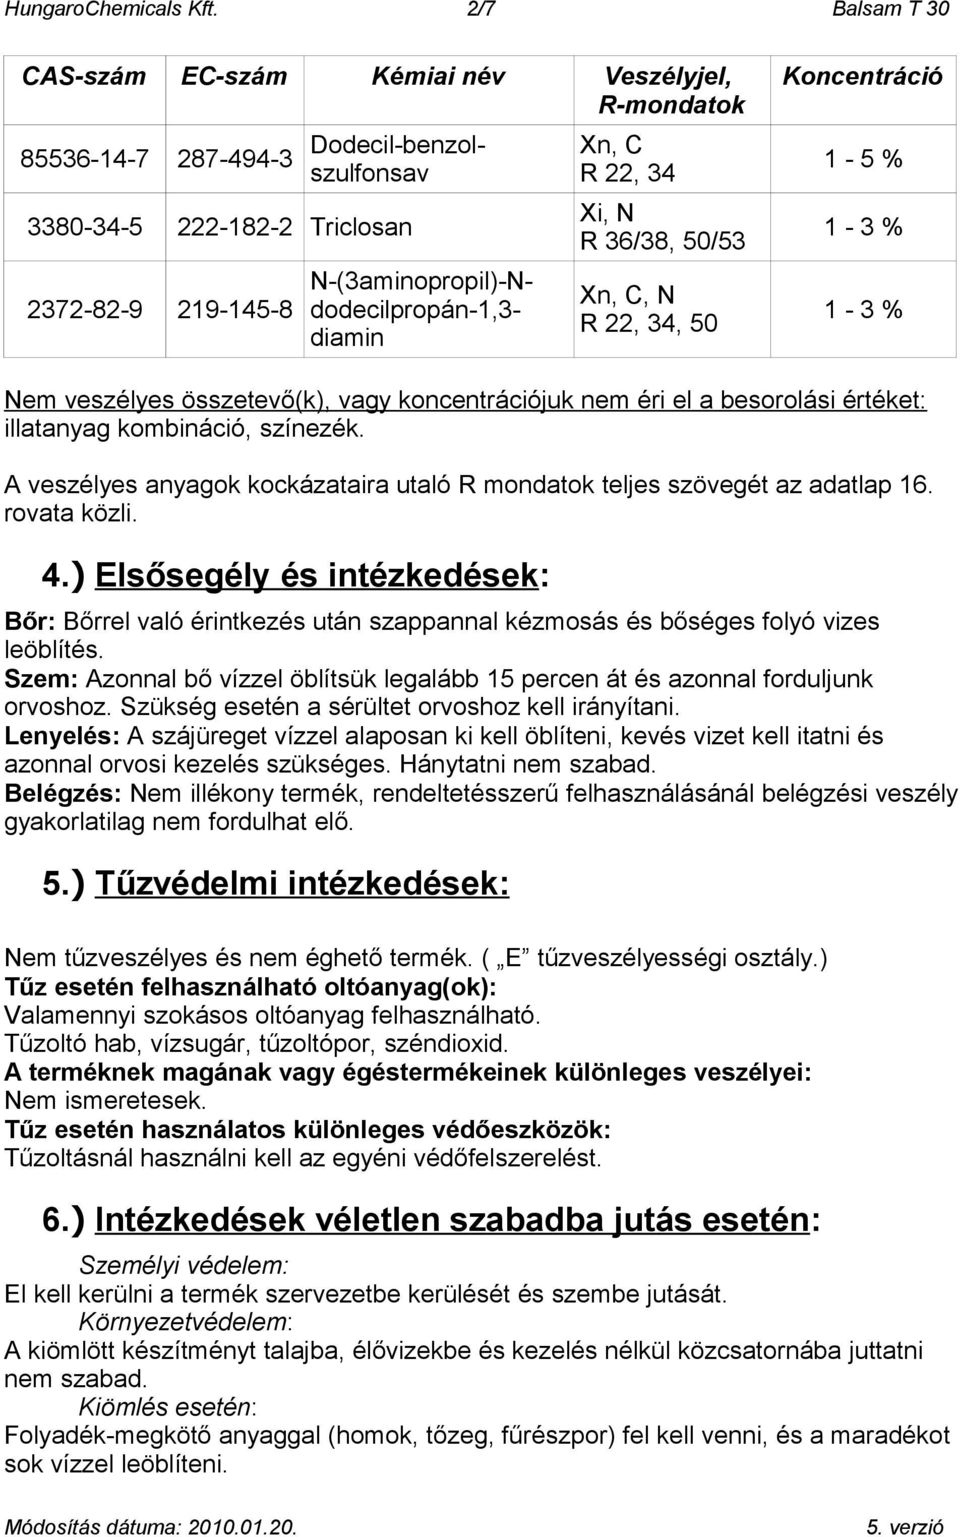 HungaroChemicals Kft. 1/7 Balsam T 30. BIZTONSÁGI ADATLAP 1907/2006/EK  rendelet, REACH - PDF Free Download